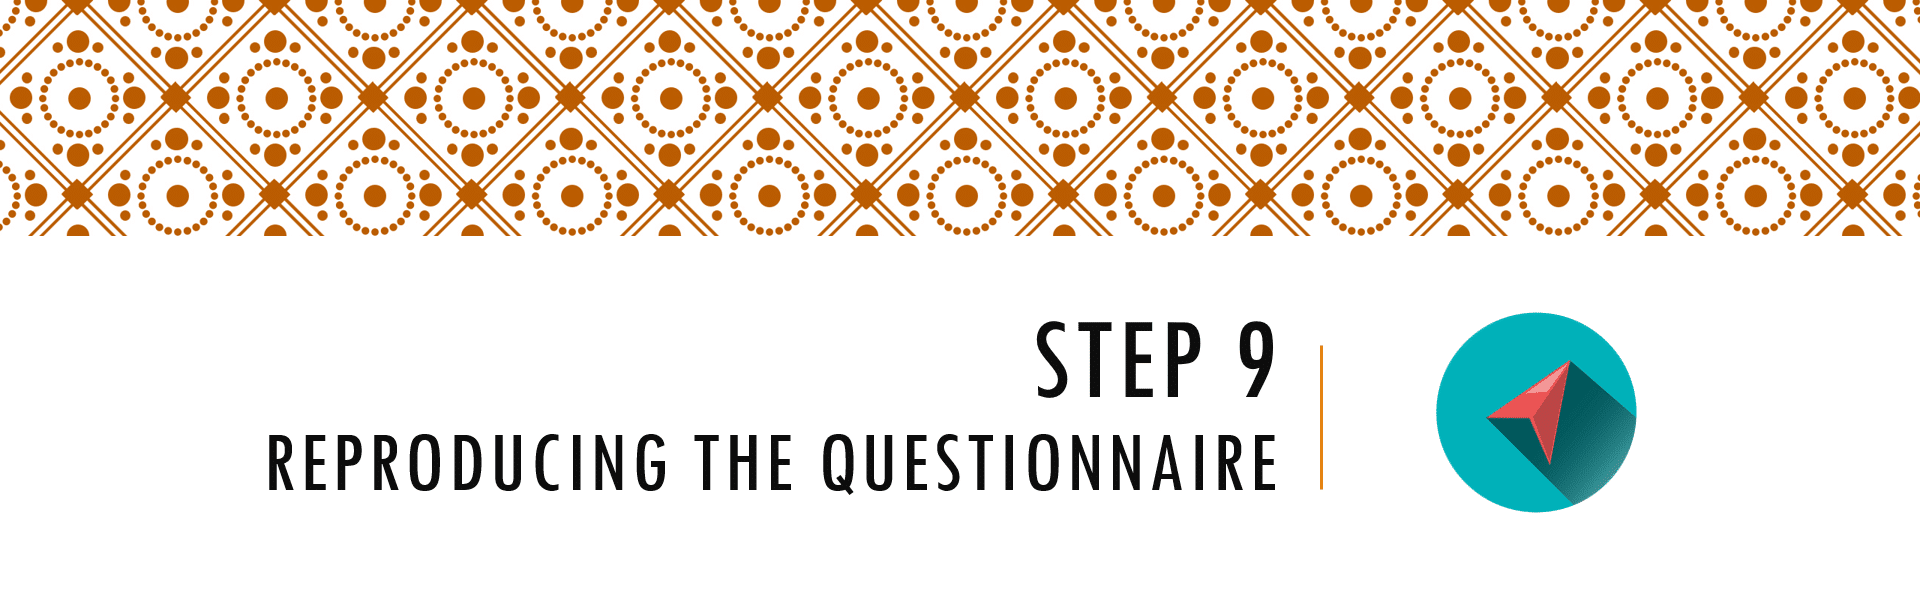 Questionnaire Design Process Step 9 - Reproducing the Questionnaire